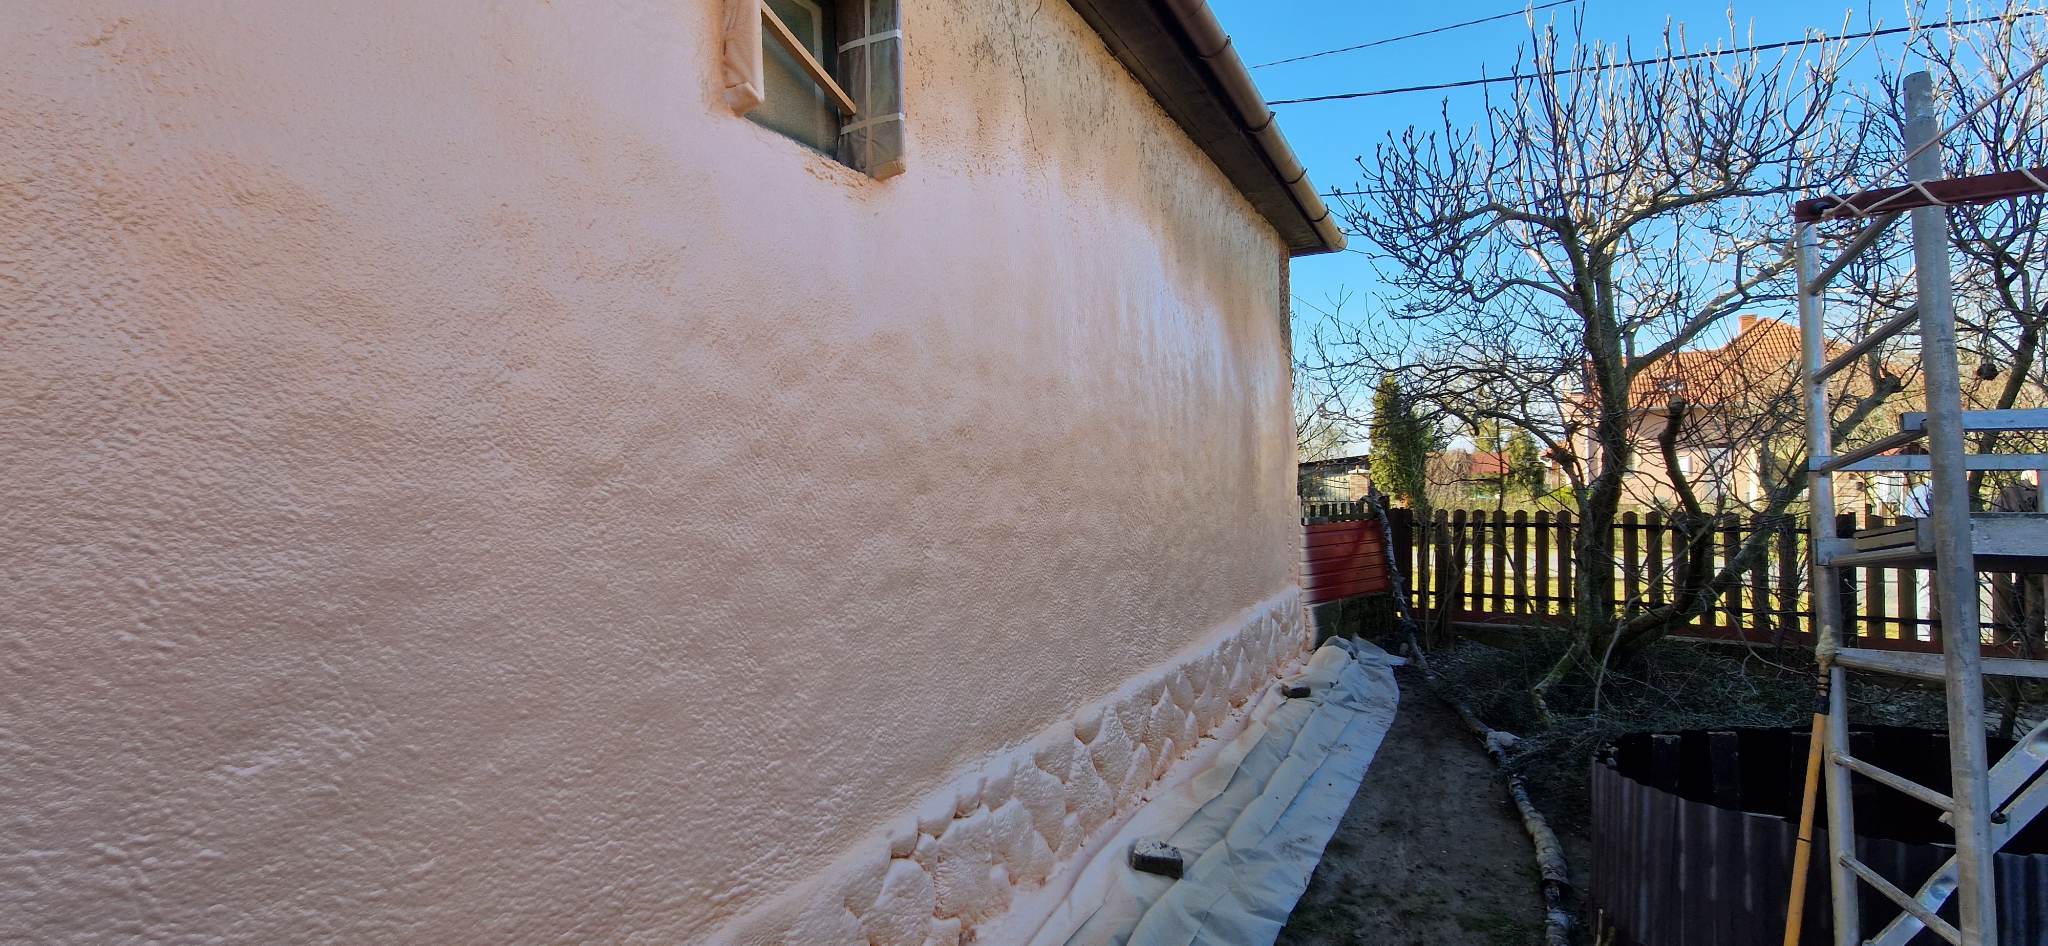 Marcali - side wall insulation